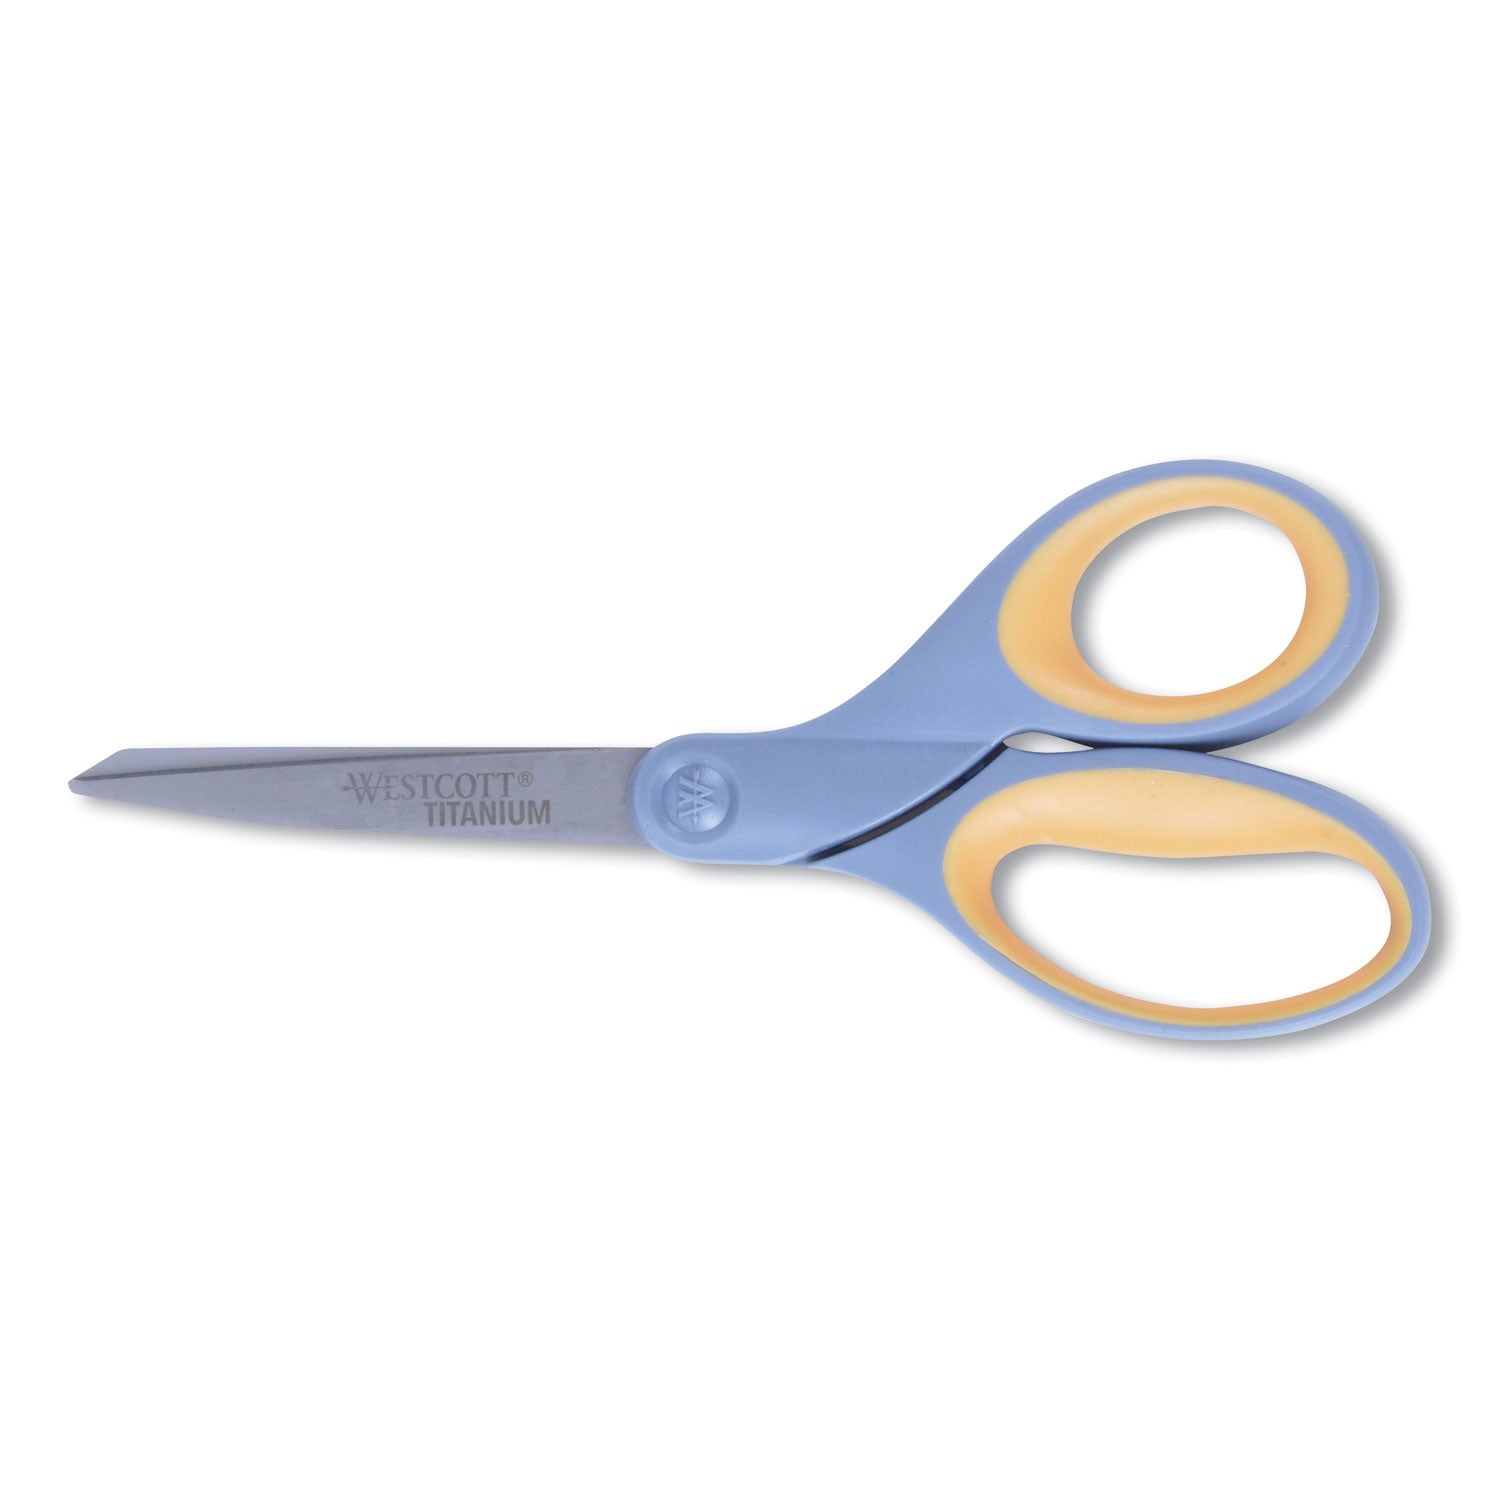 Titanium Bonded Scissors, 8" Long, 3.5" Cut Length, Gray/Yellow Straight Handle - 